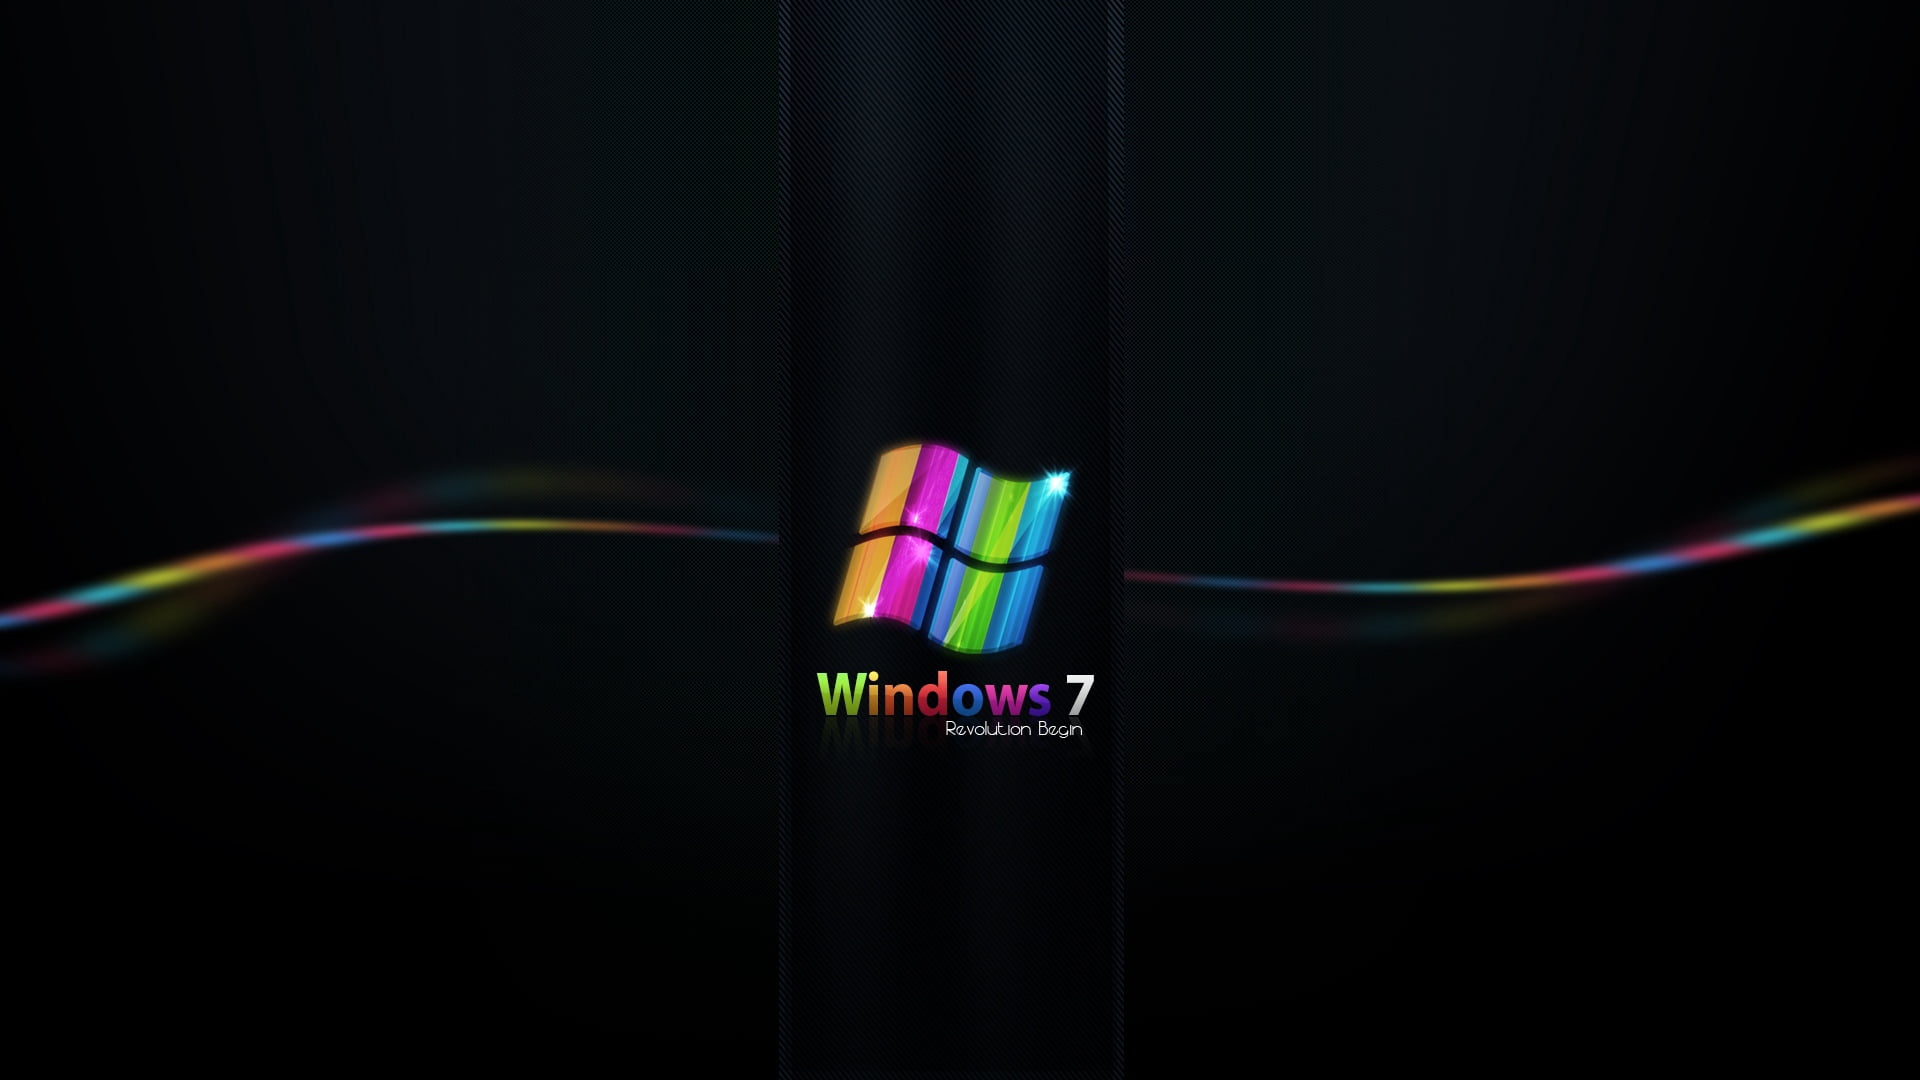 Windows 7 digital wallpaper, rainbow, black, line, backgrounds